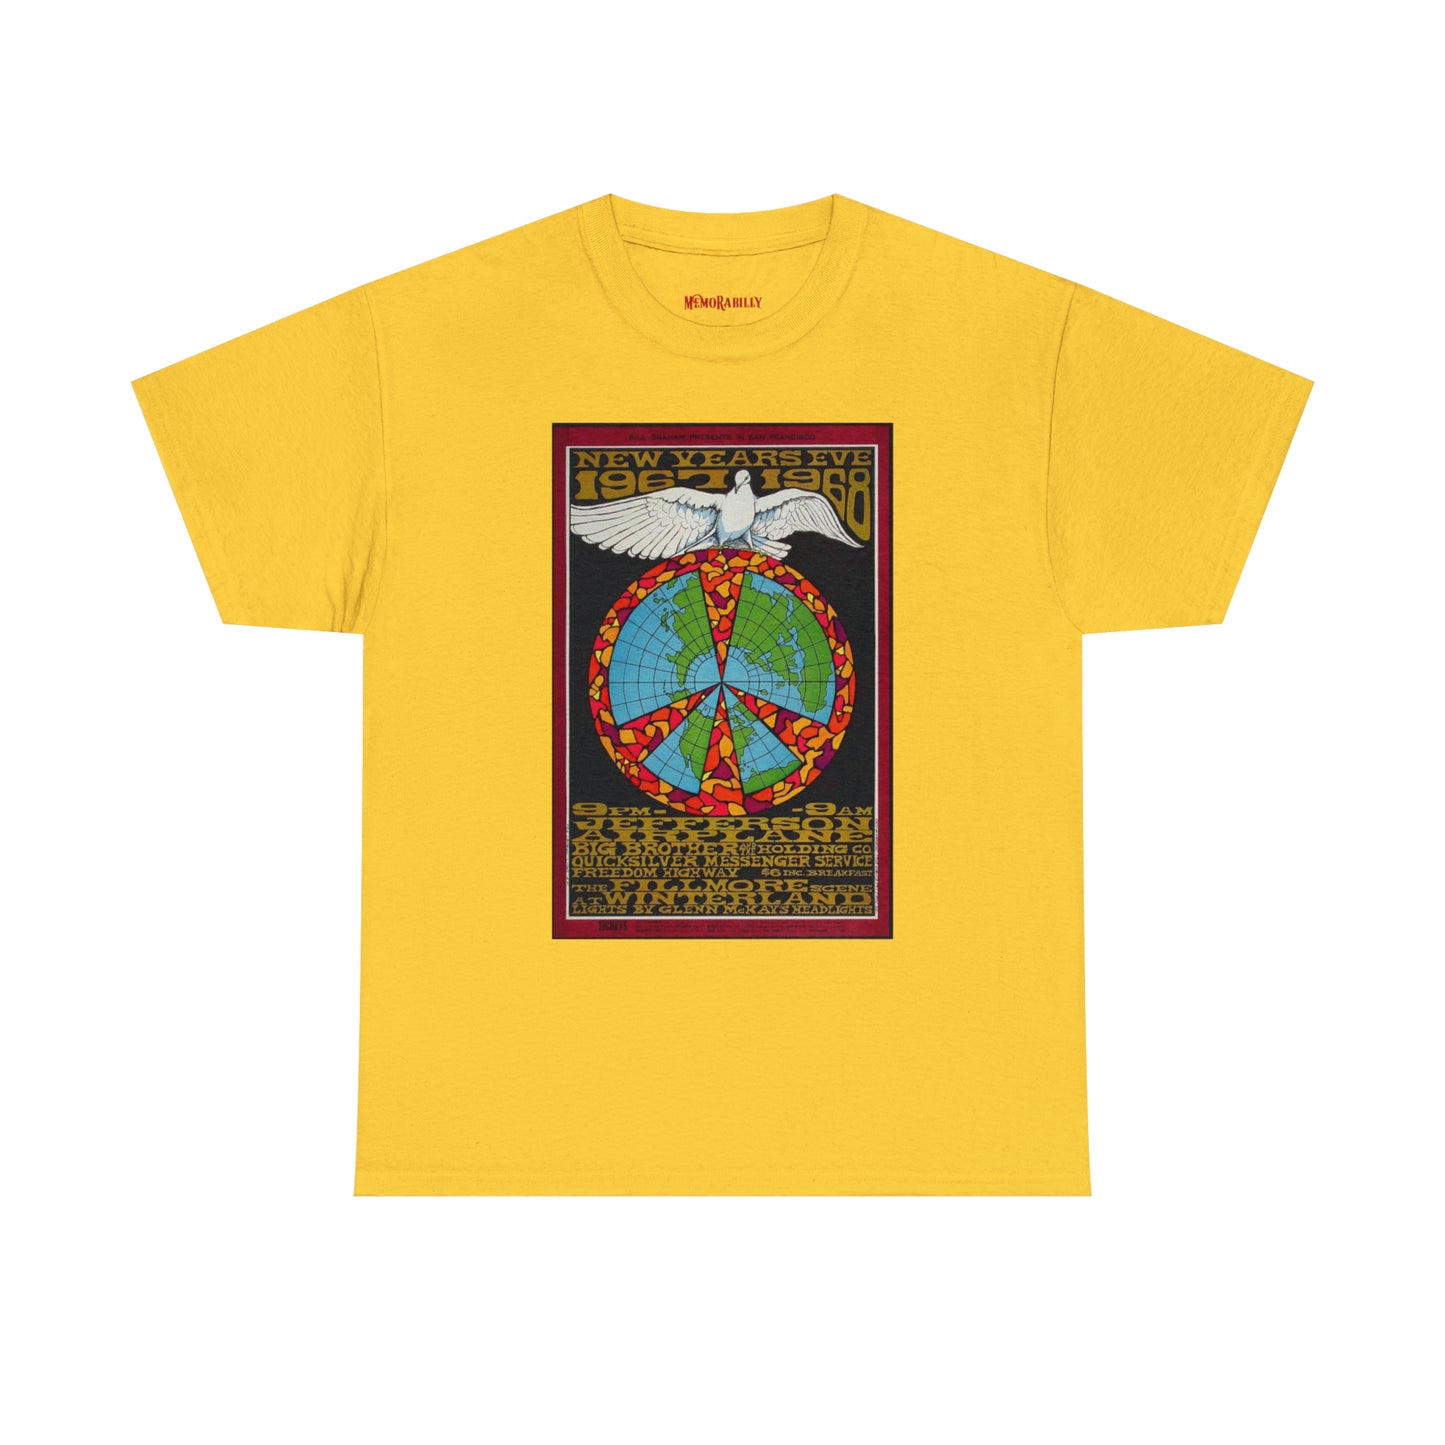 New Years Eve '67 '68 Concert | T-shirt | Music | Unisex